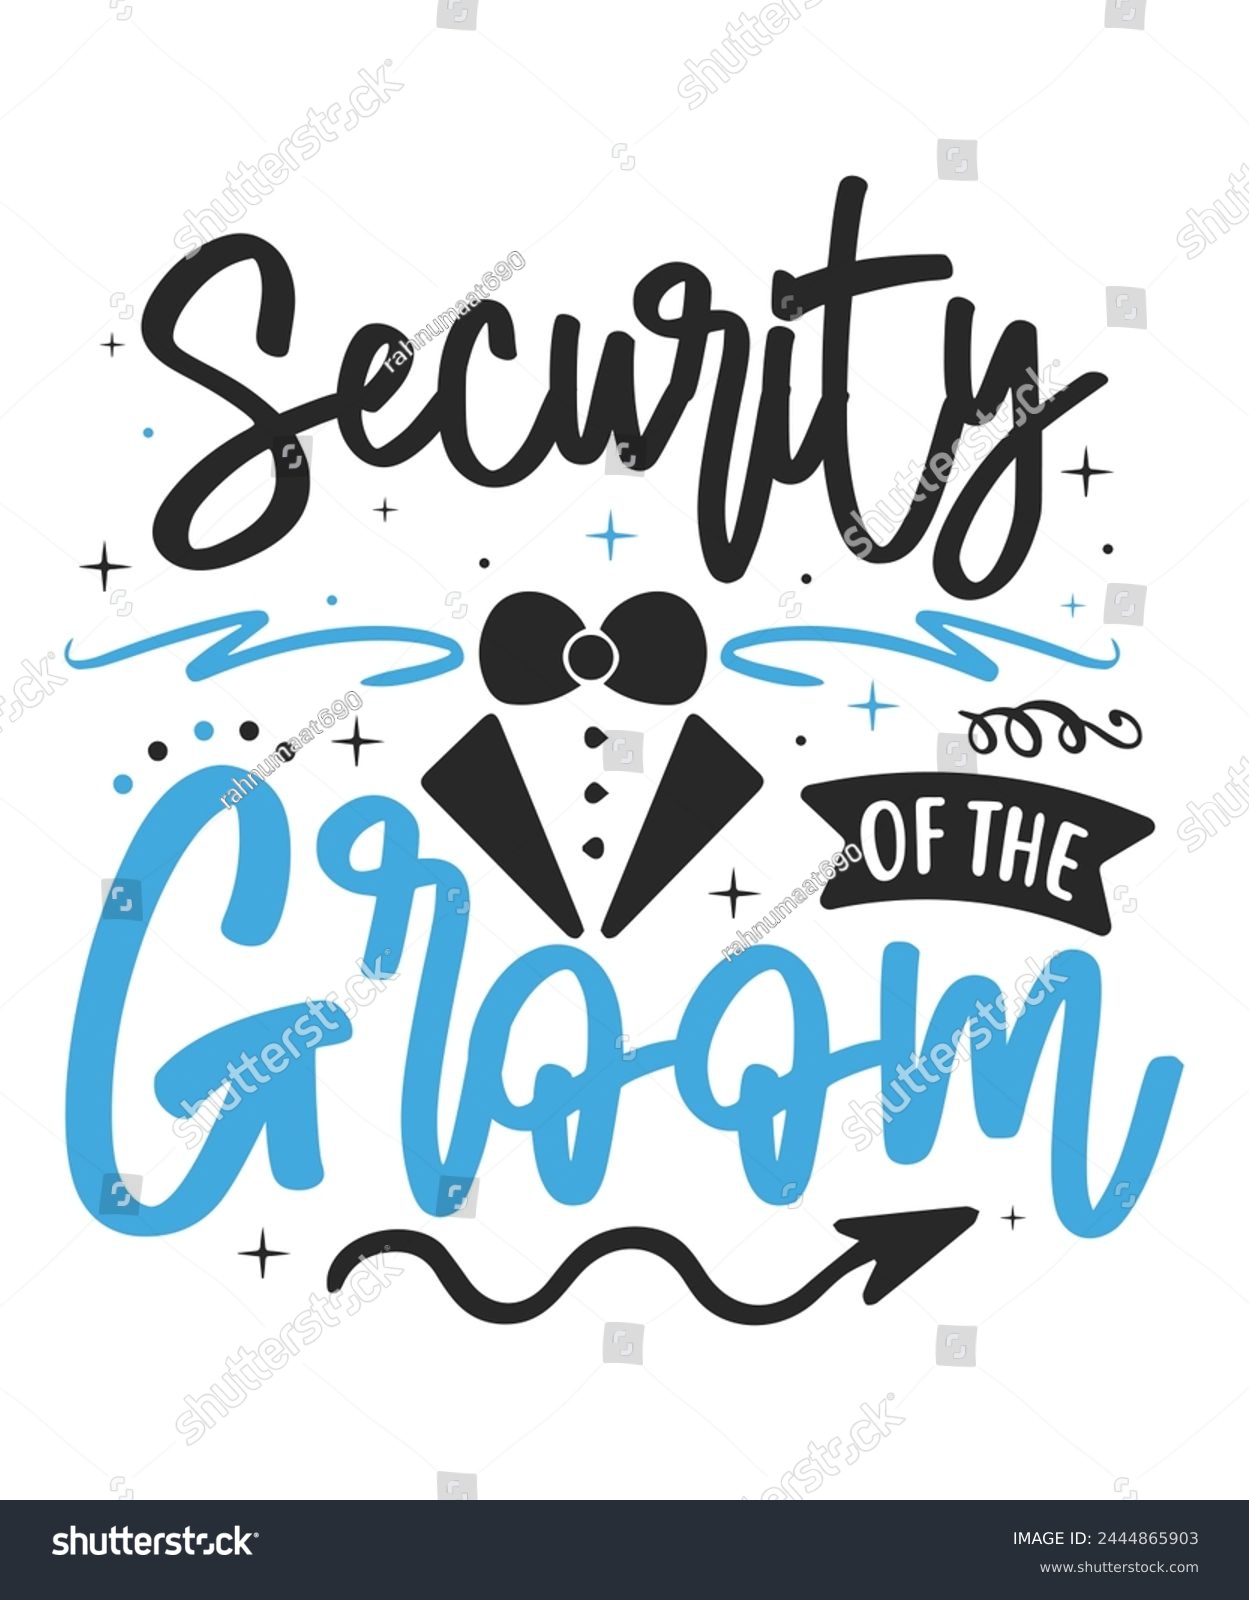 SVG of Security of the groom wedding bride groom svg